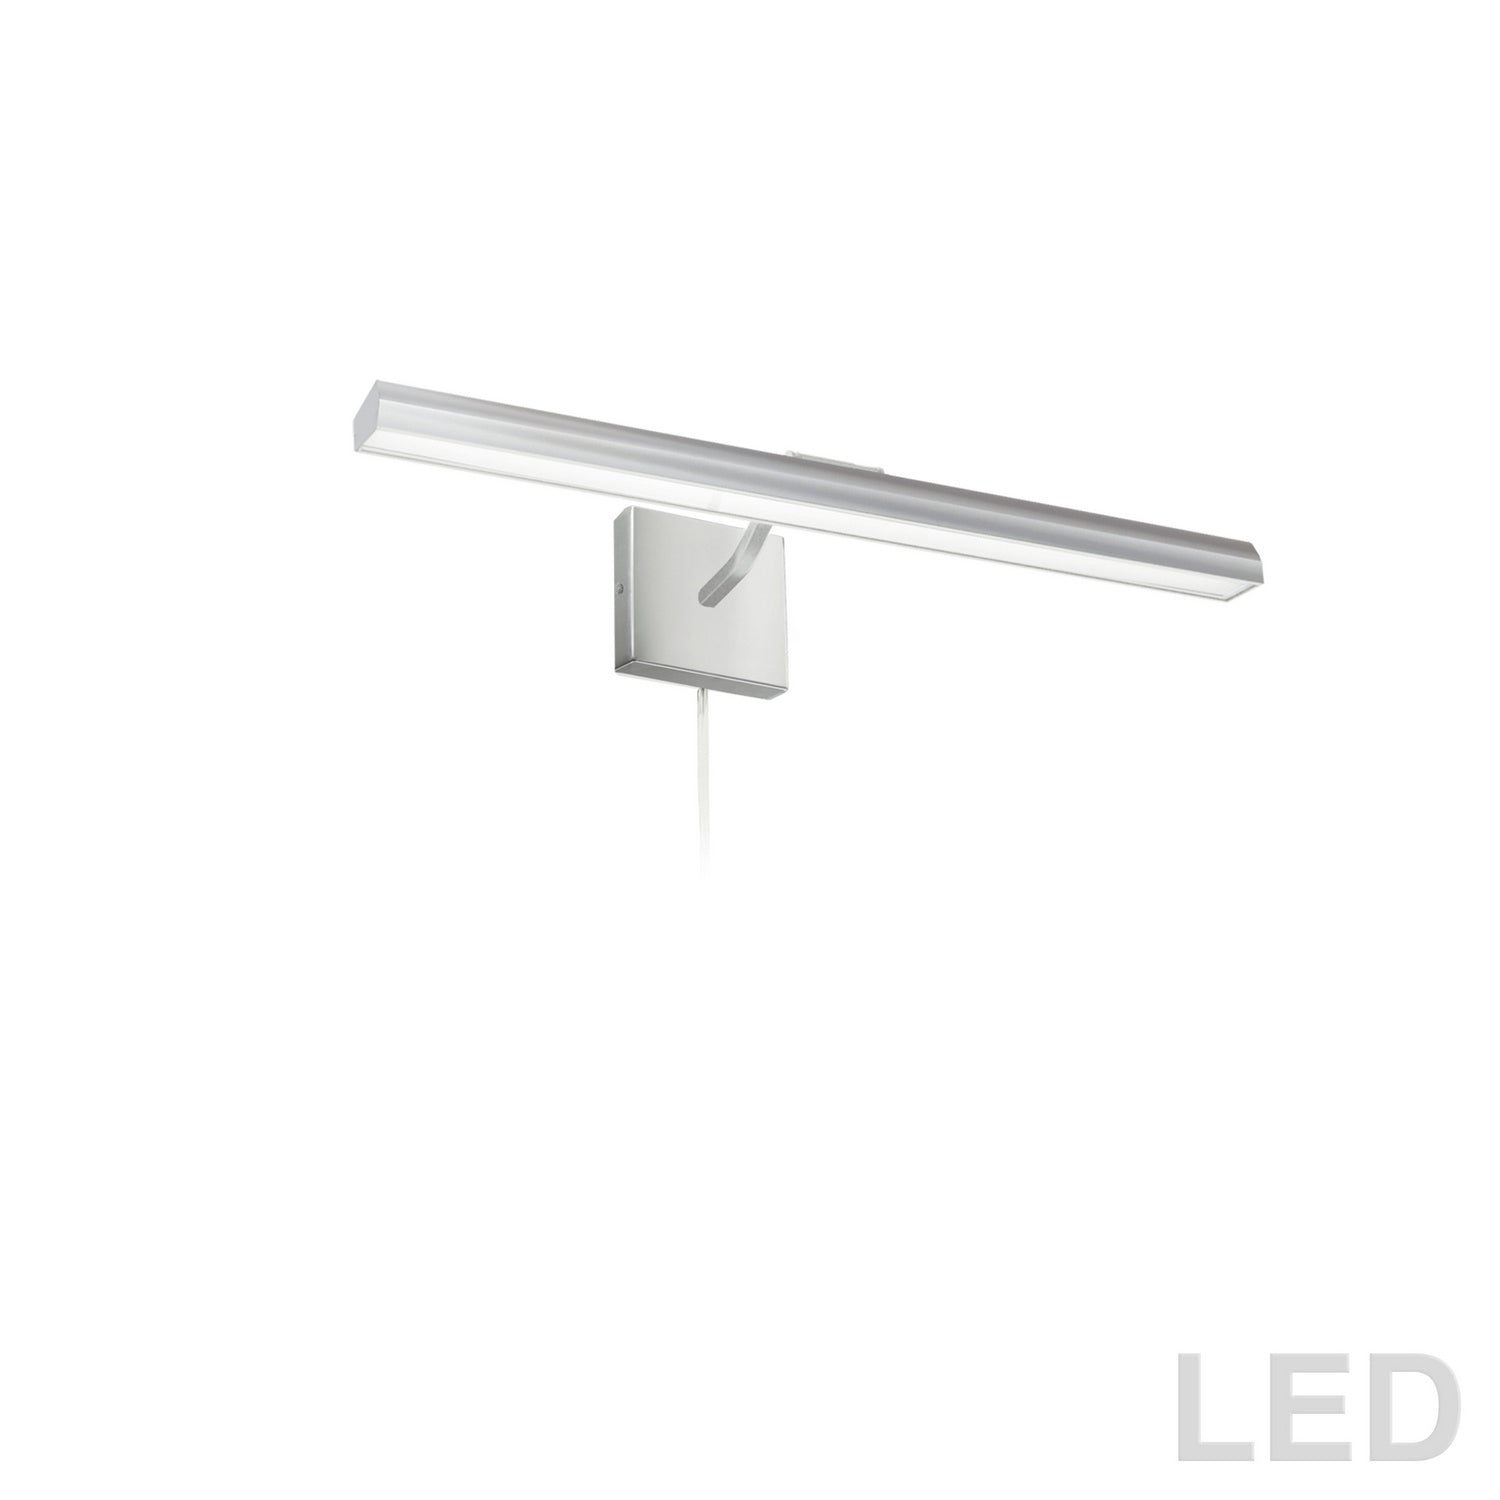 Dainolite Canada - LED Picture Light - Leonardo - Satin Chrome- Union Lighting Luminaires Decor